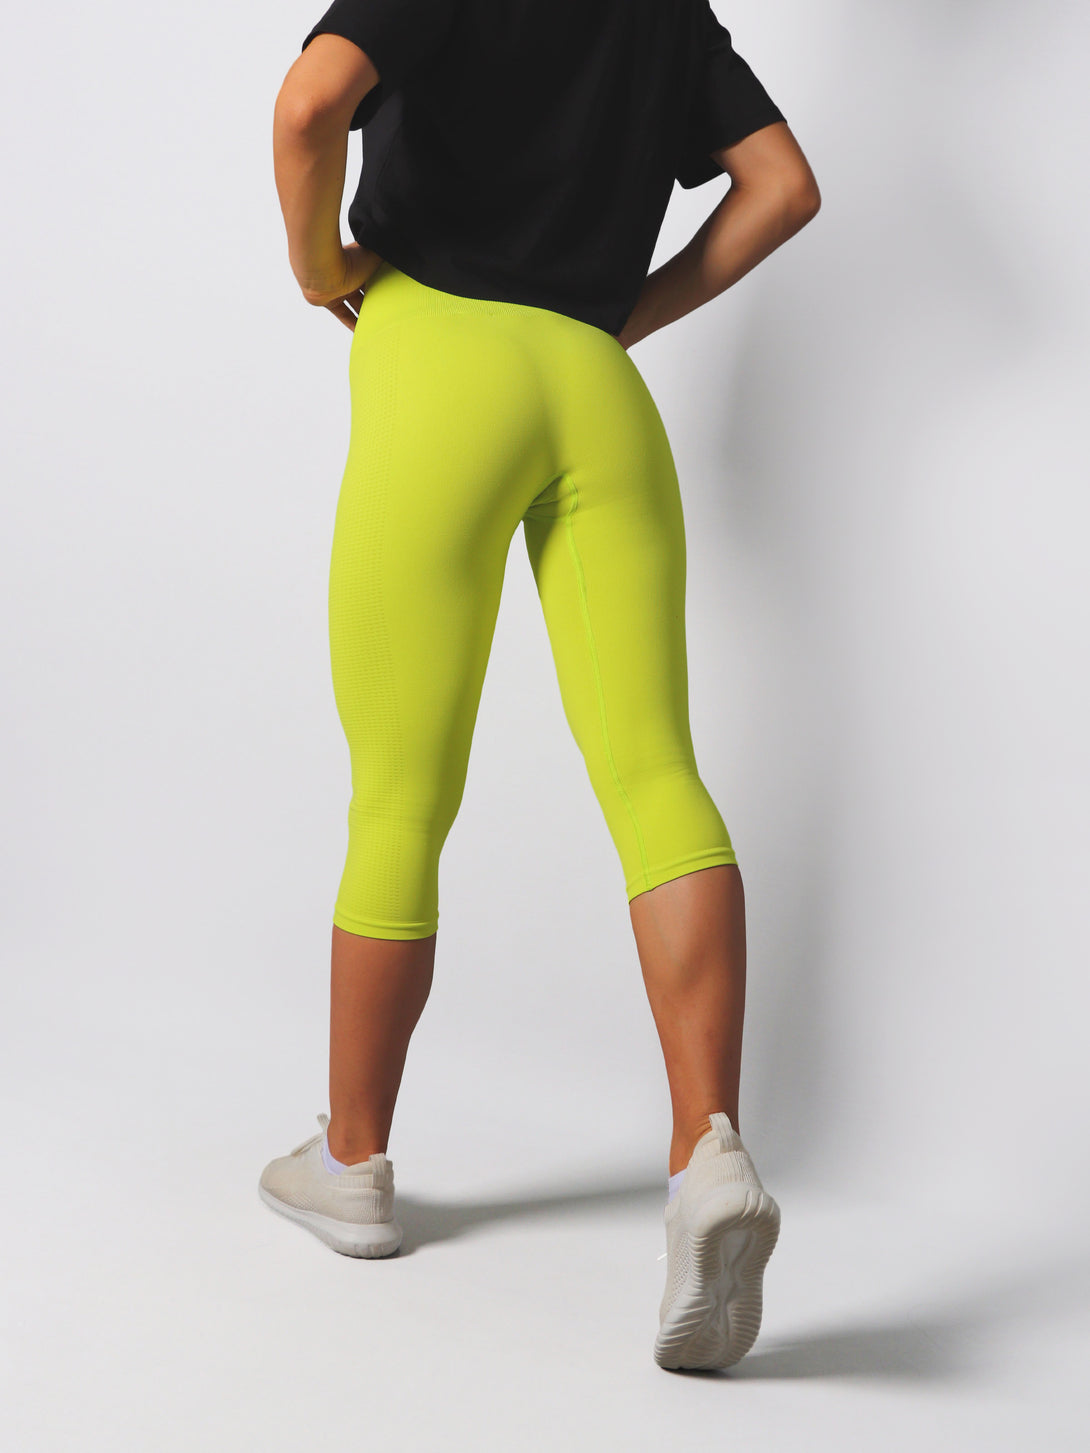 A Woman Wearing Lime Color Seamless Capri Legging